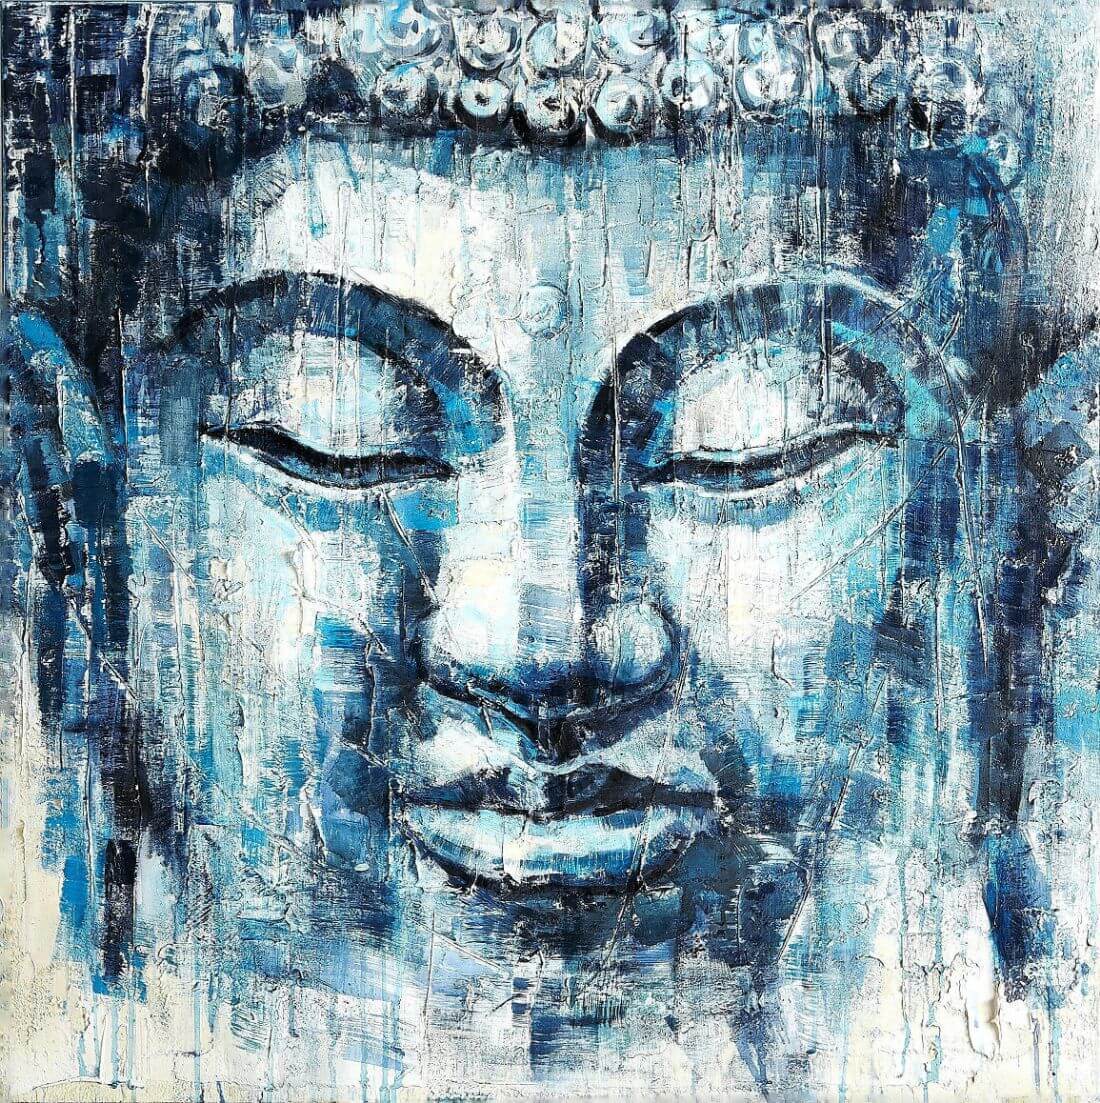 Blue Buddha Art Painting - Art Prints by Anzai | Buy Posters ...